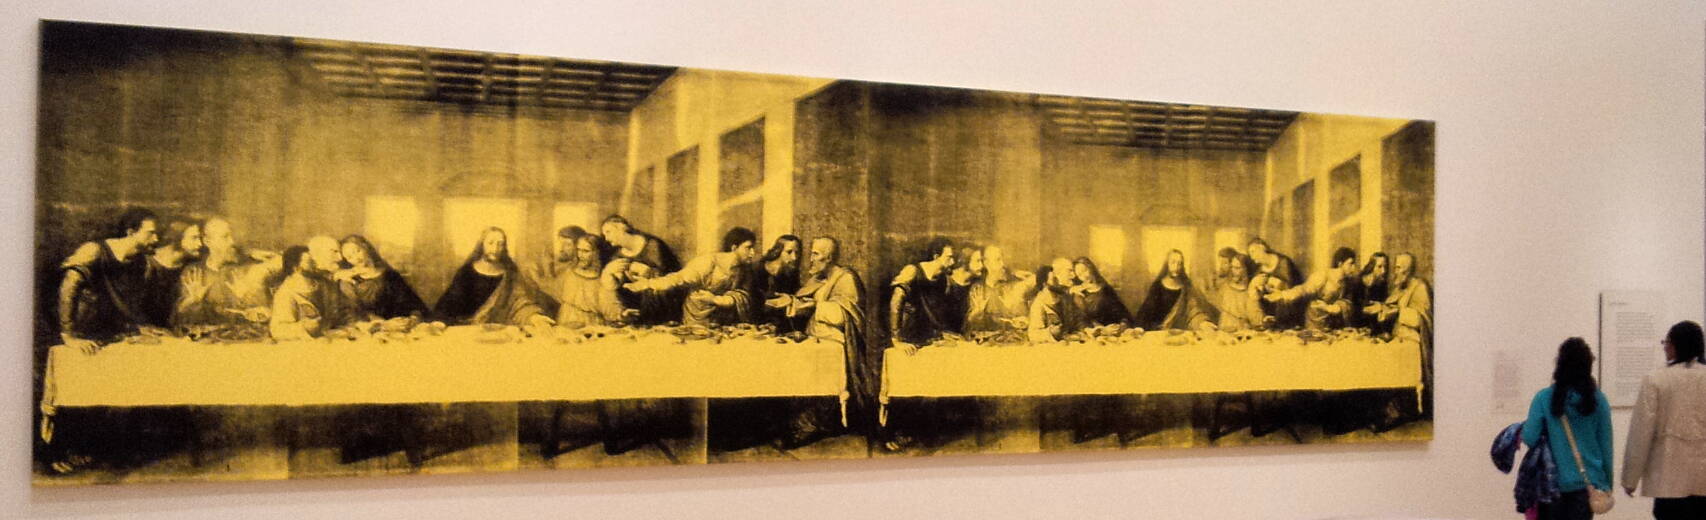 One of Andy Warhol's re-imaginings of Leonardo da Vinci's 'Last Supper'.